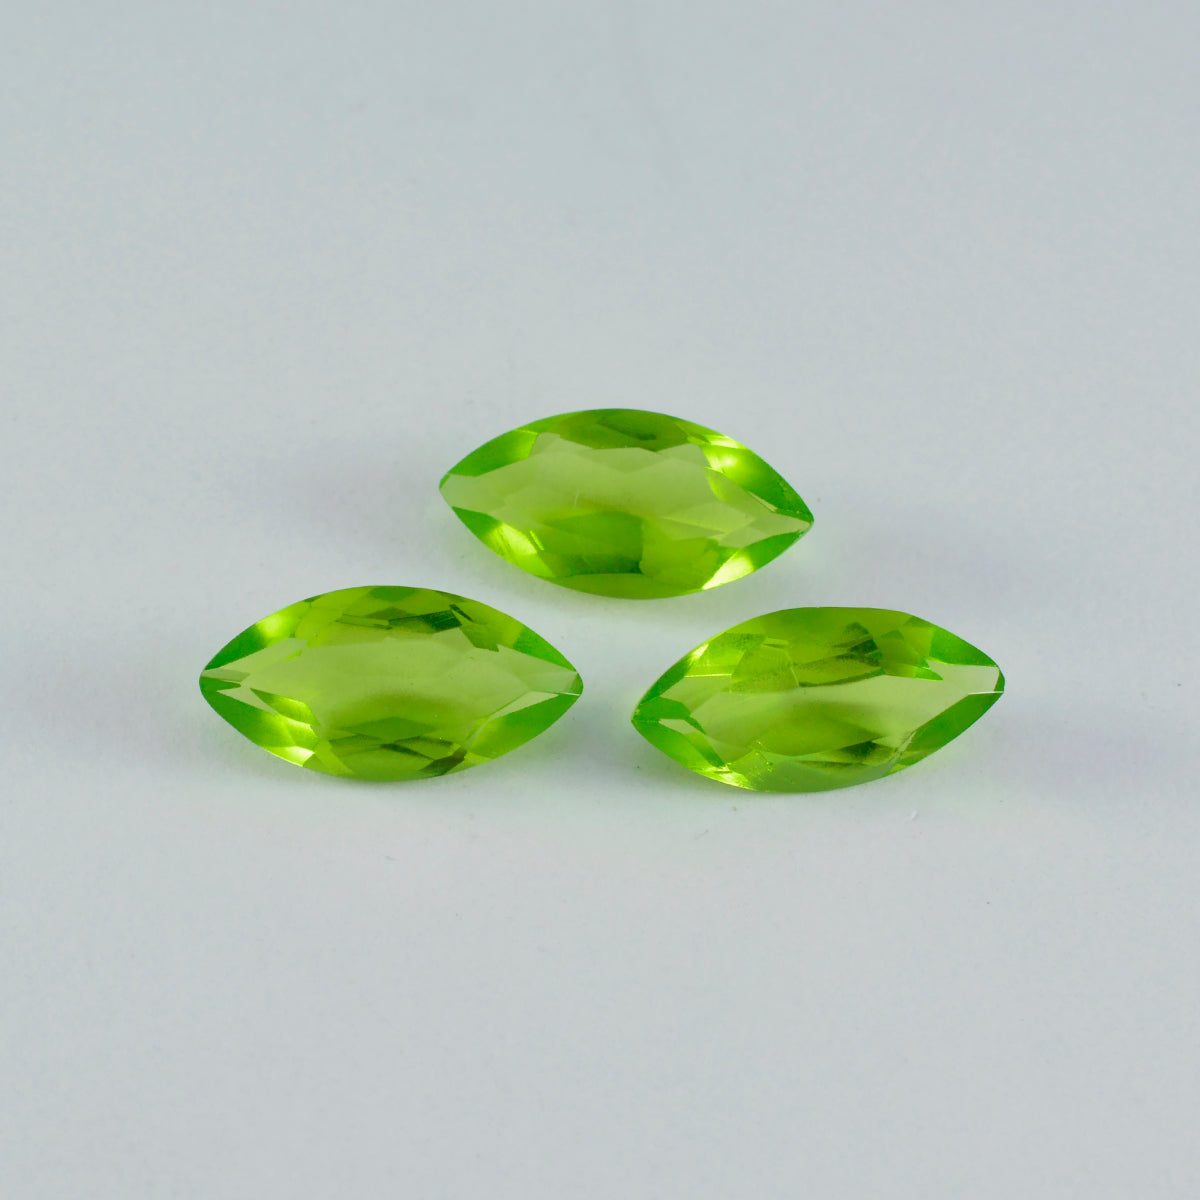 Riyogems 1PC Green Peridot CZ Faceted 9x18 mm Marquise Shape Nice Quality Gems